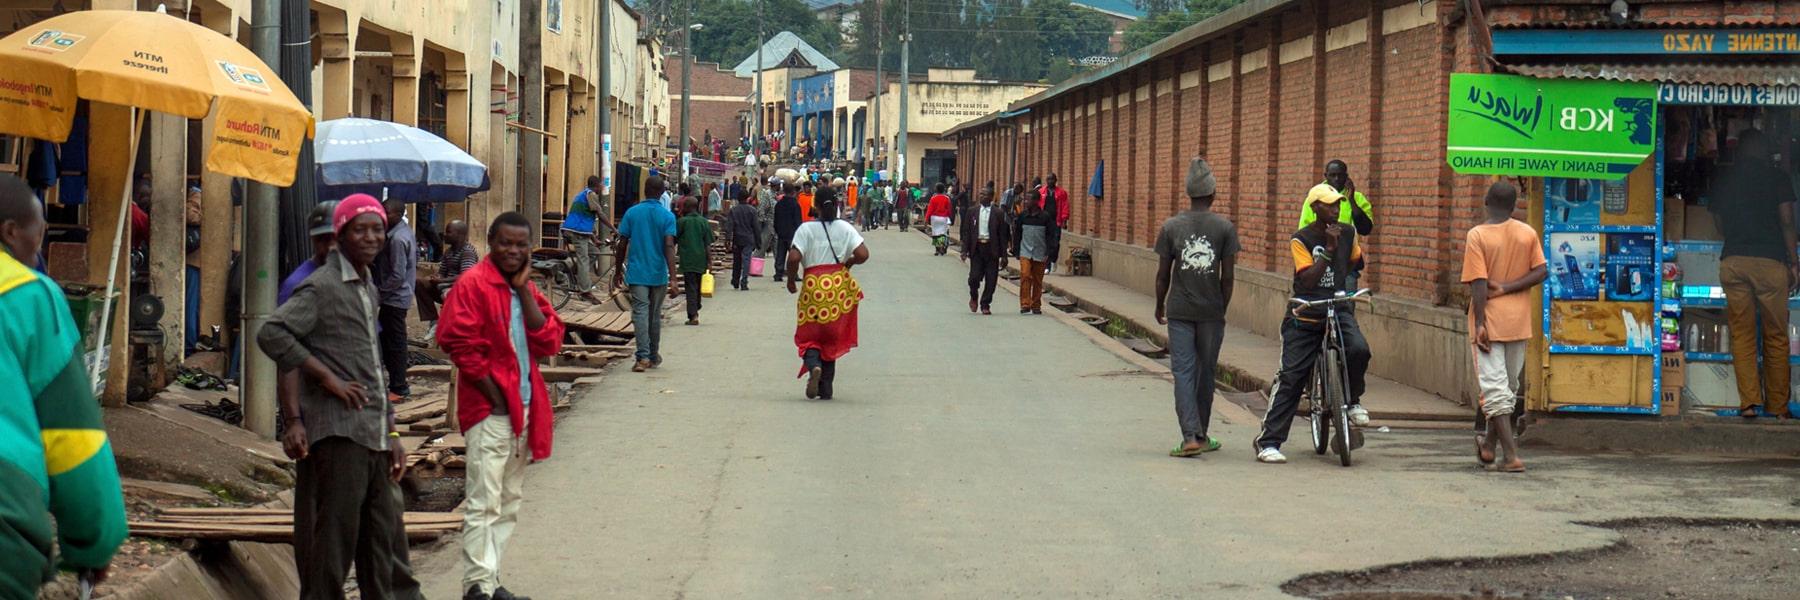 Mahoko, Rubavu, Rwanda: main street on market day with many people entering the town, the cloudy sky indicates that the rainy season has started.